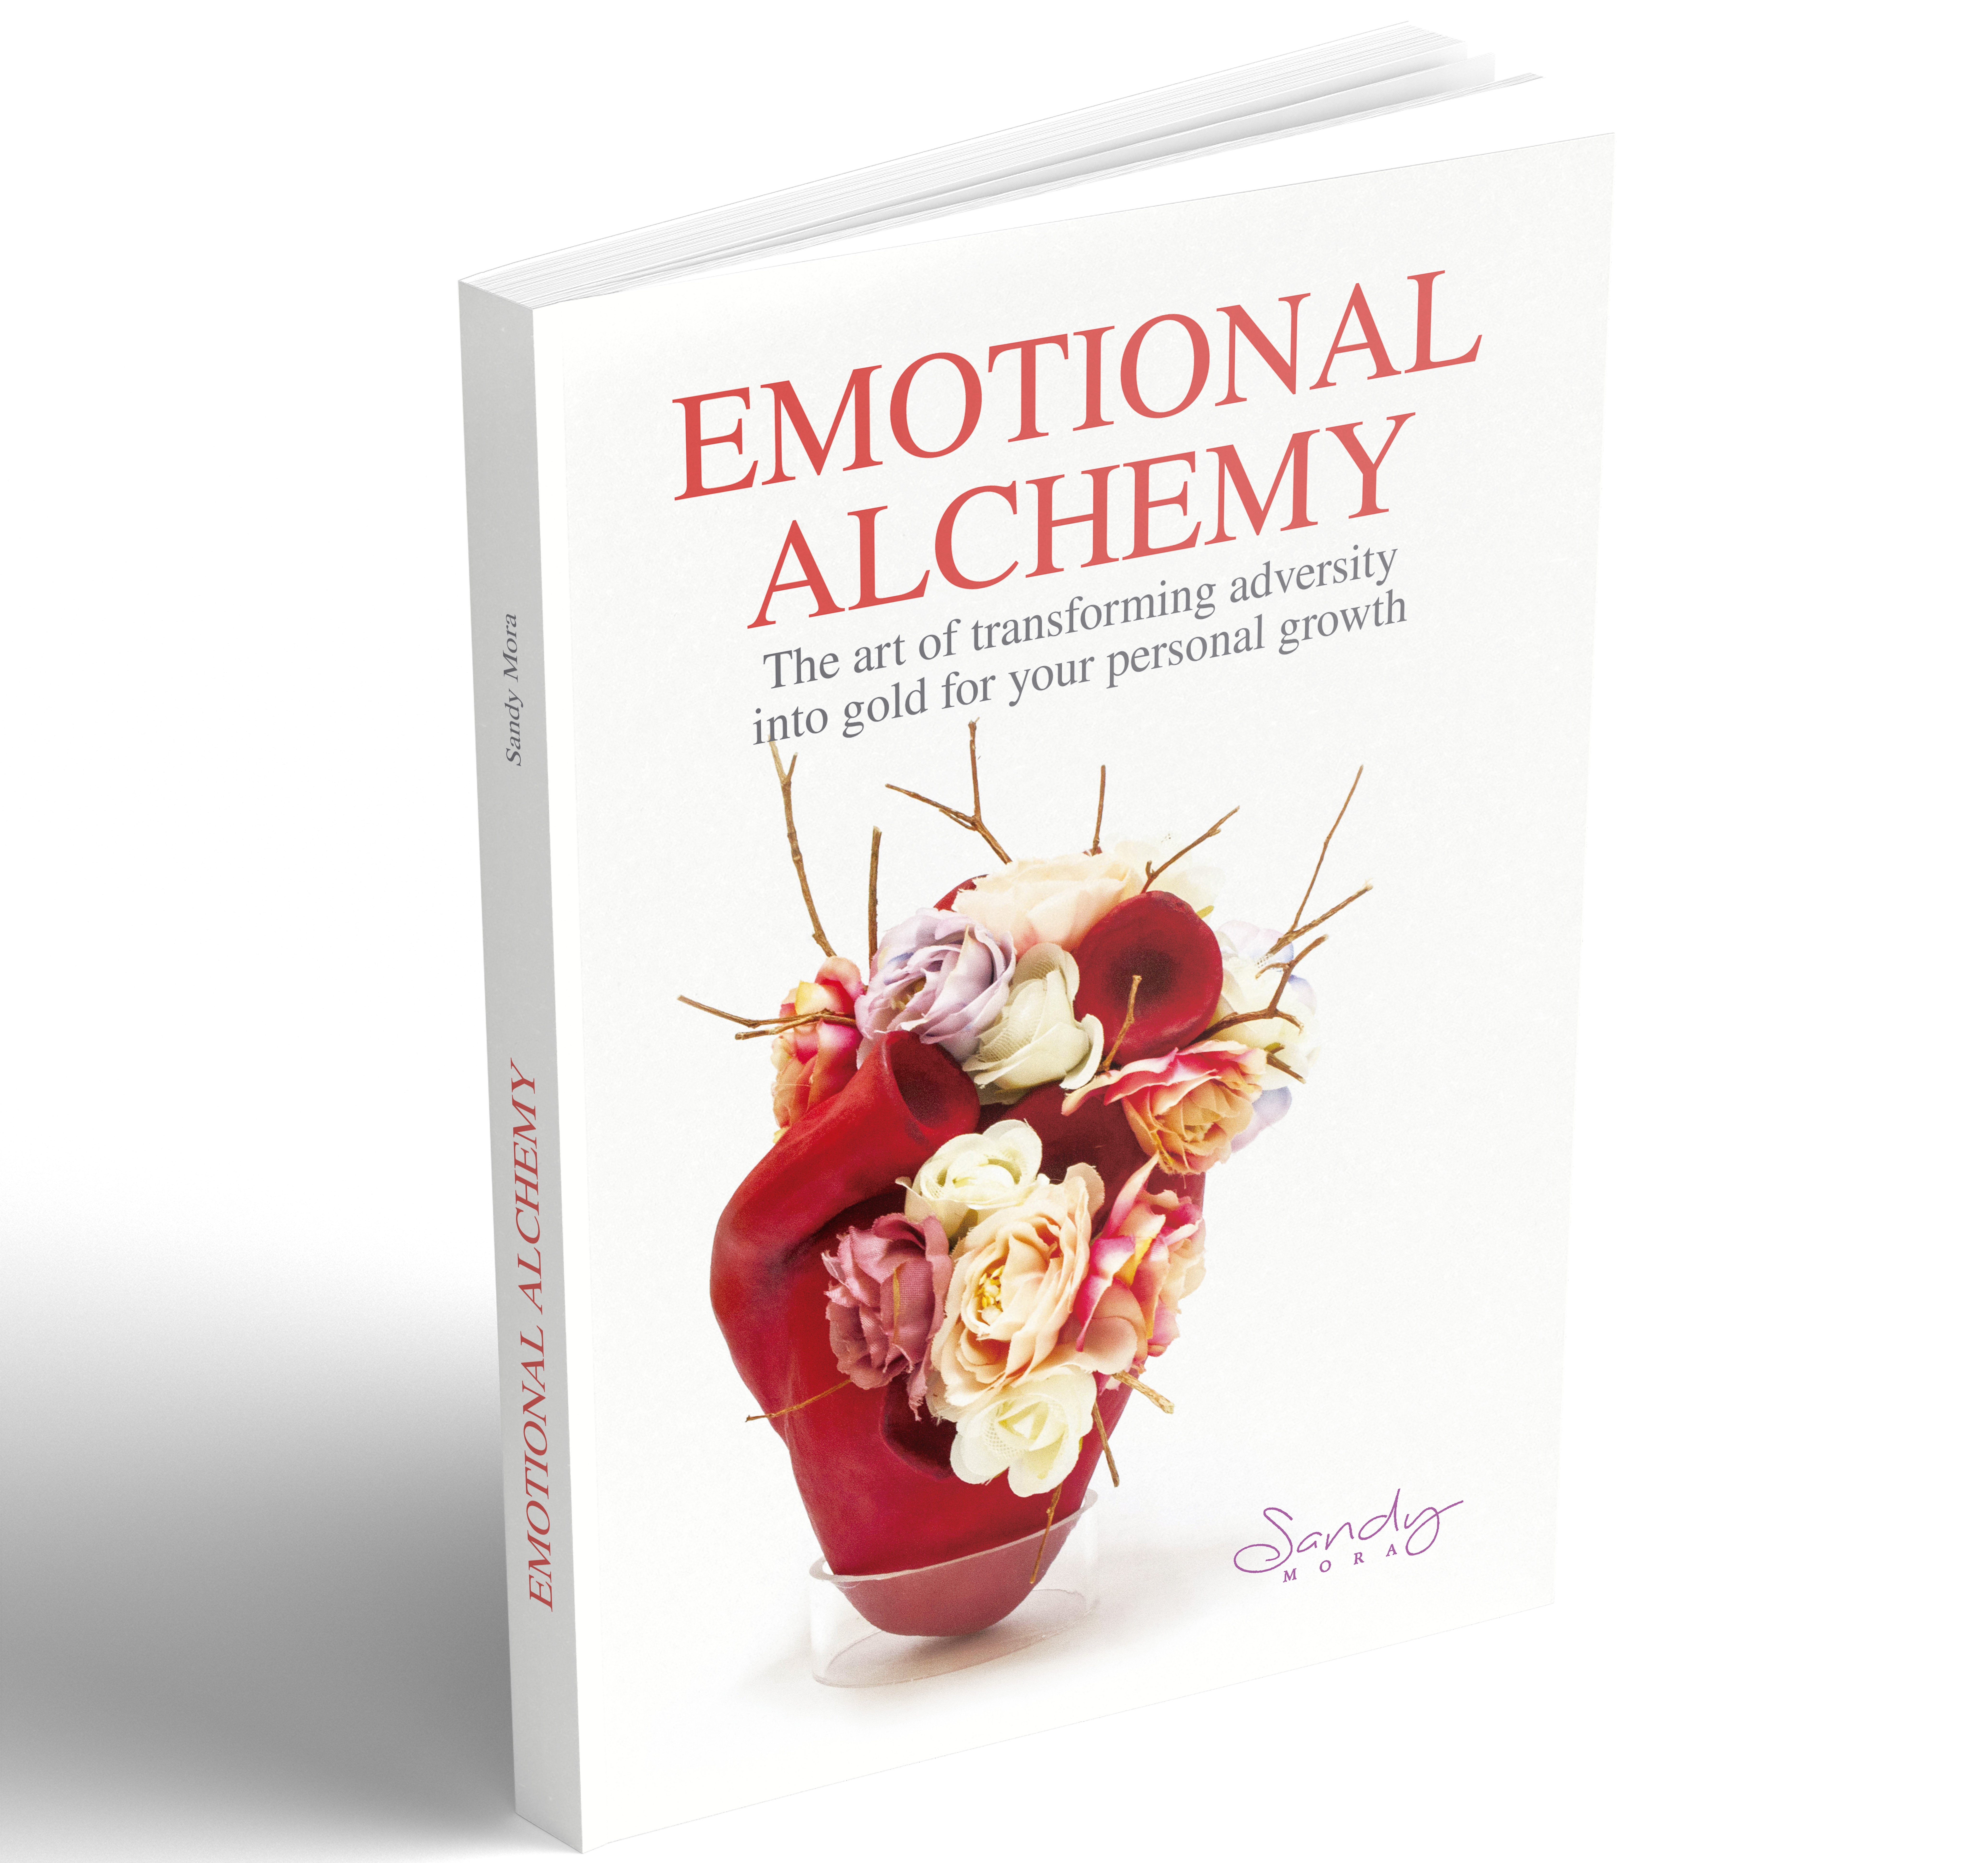 Emotional Alchemy by Sandy Mora